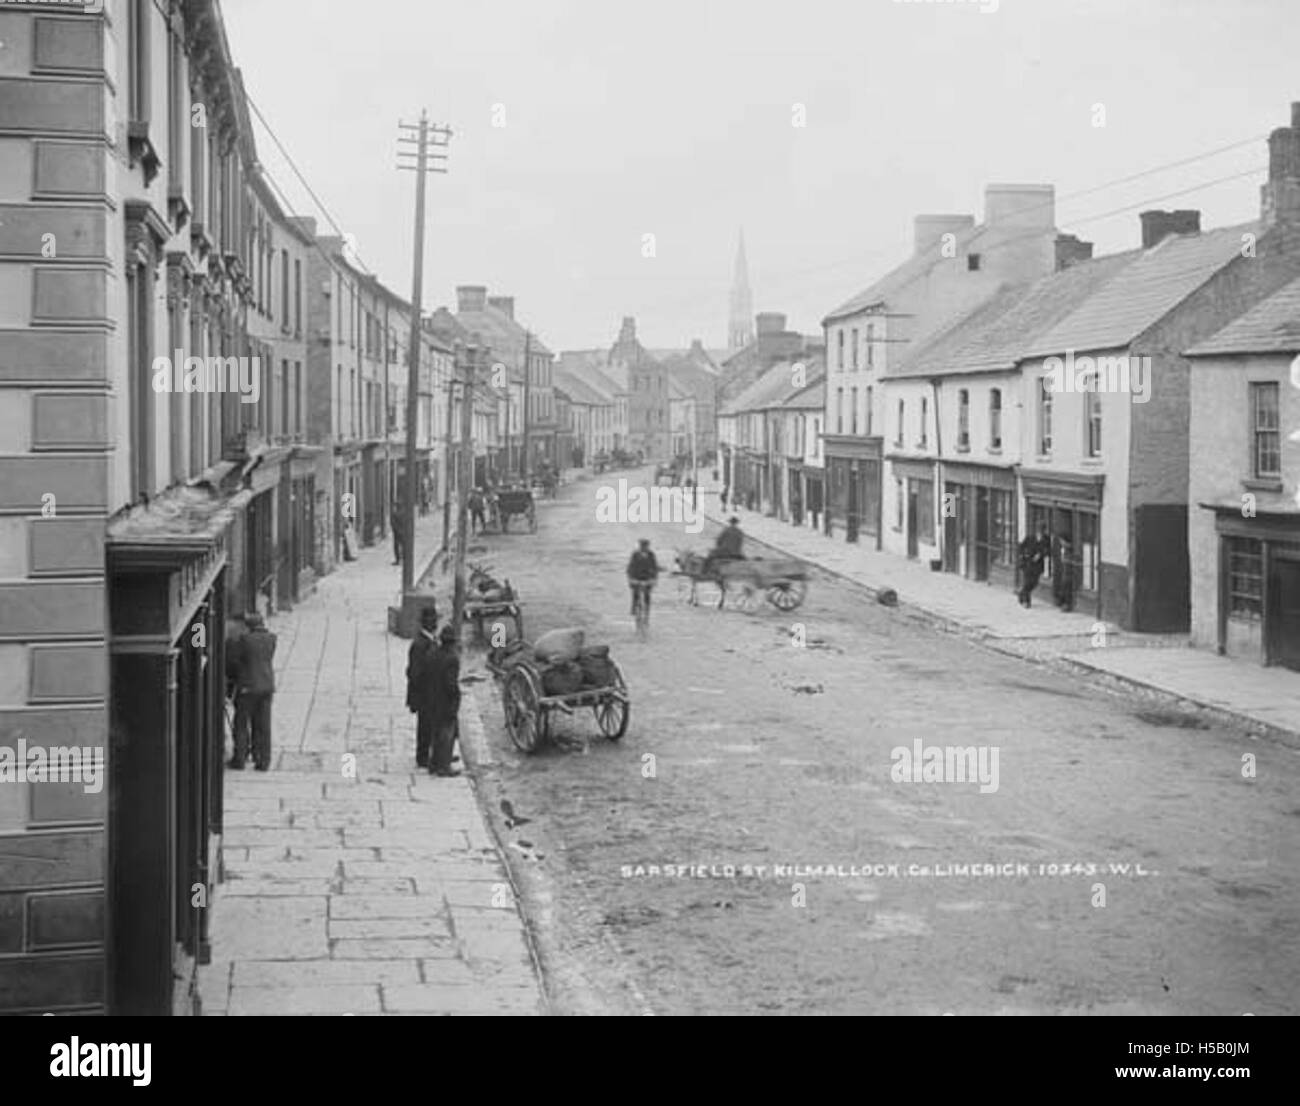 Sarsfield St. Kilmallock, Co. Limerick Stock Photo